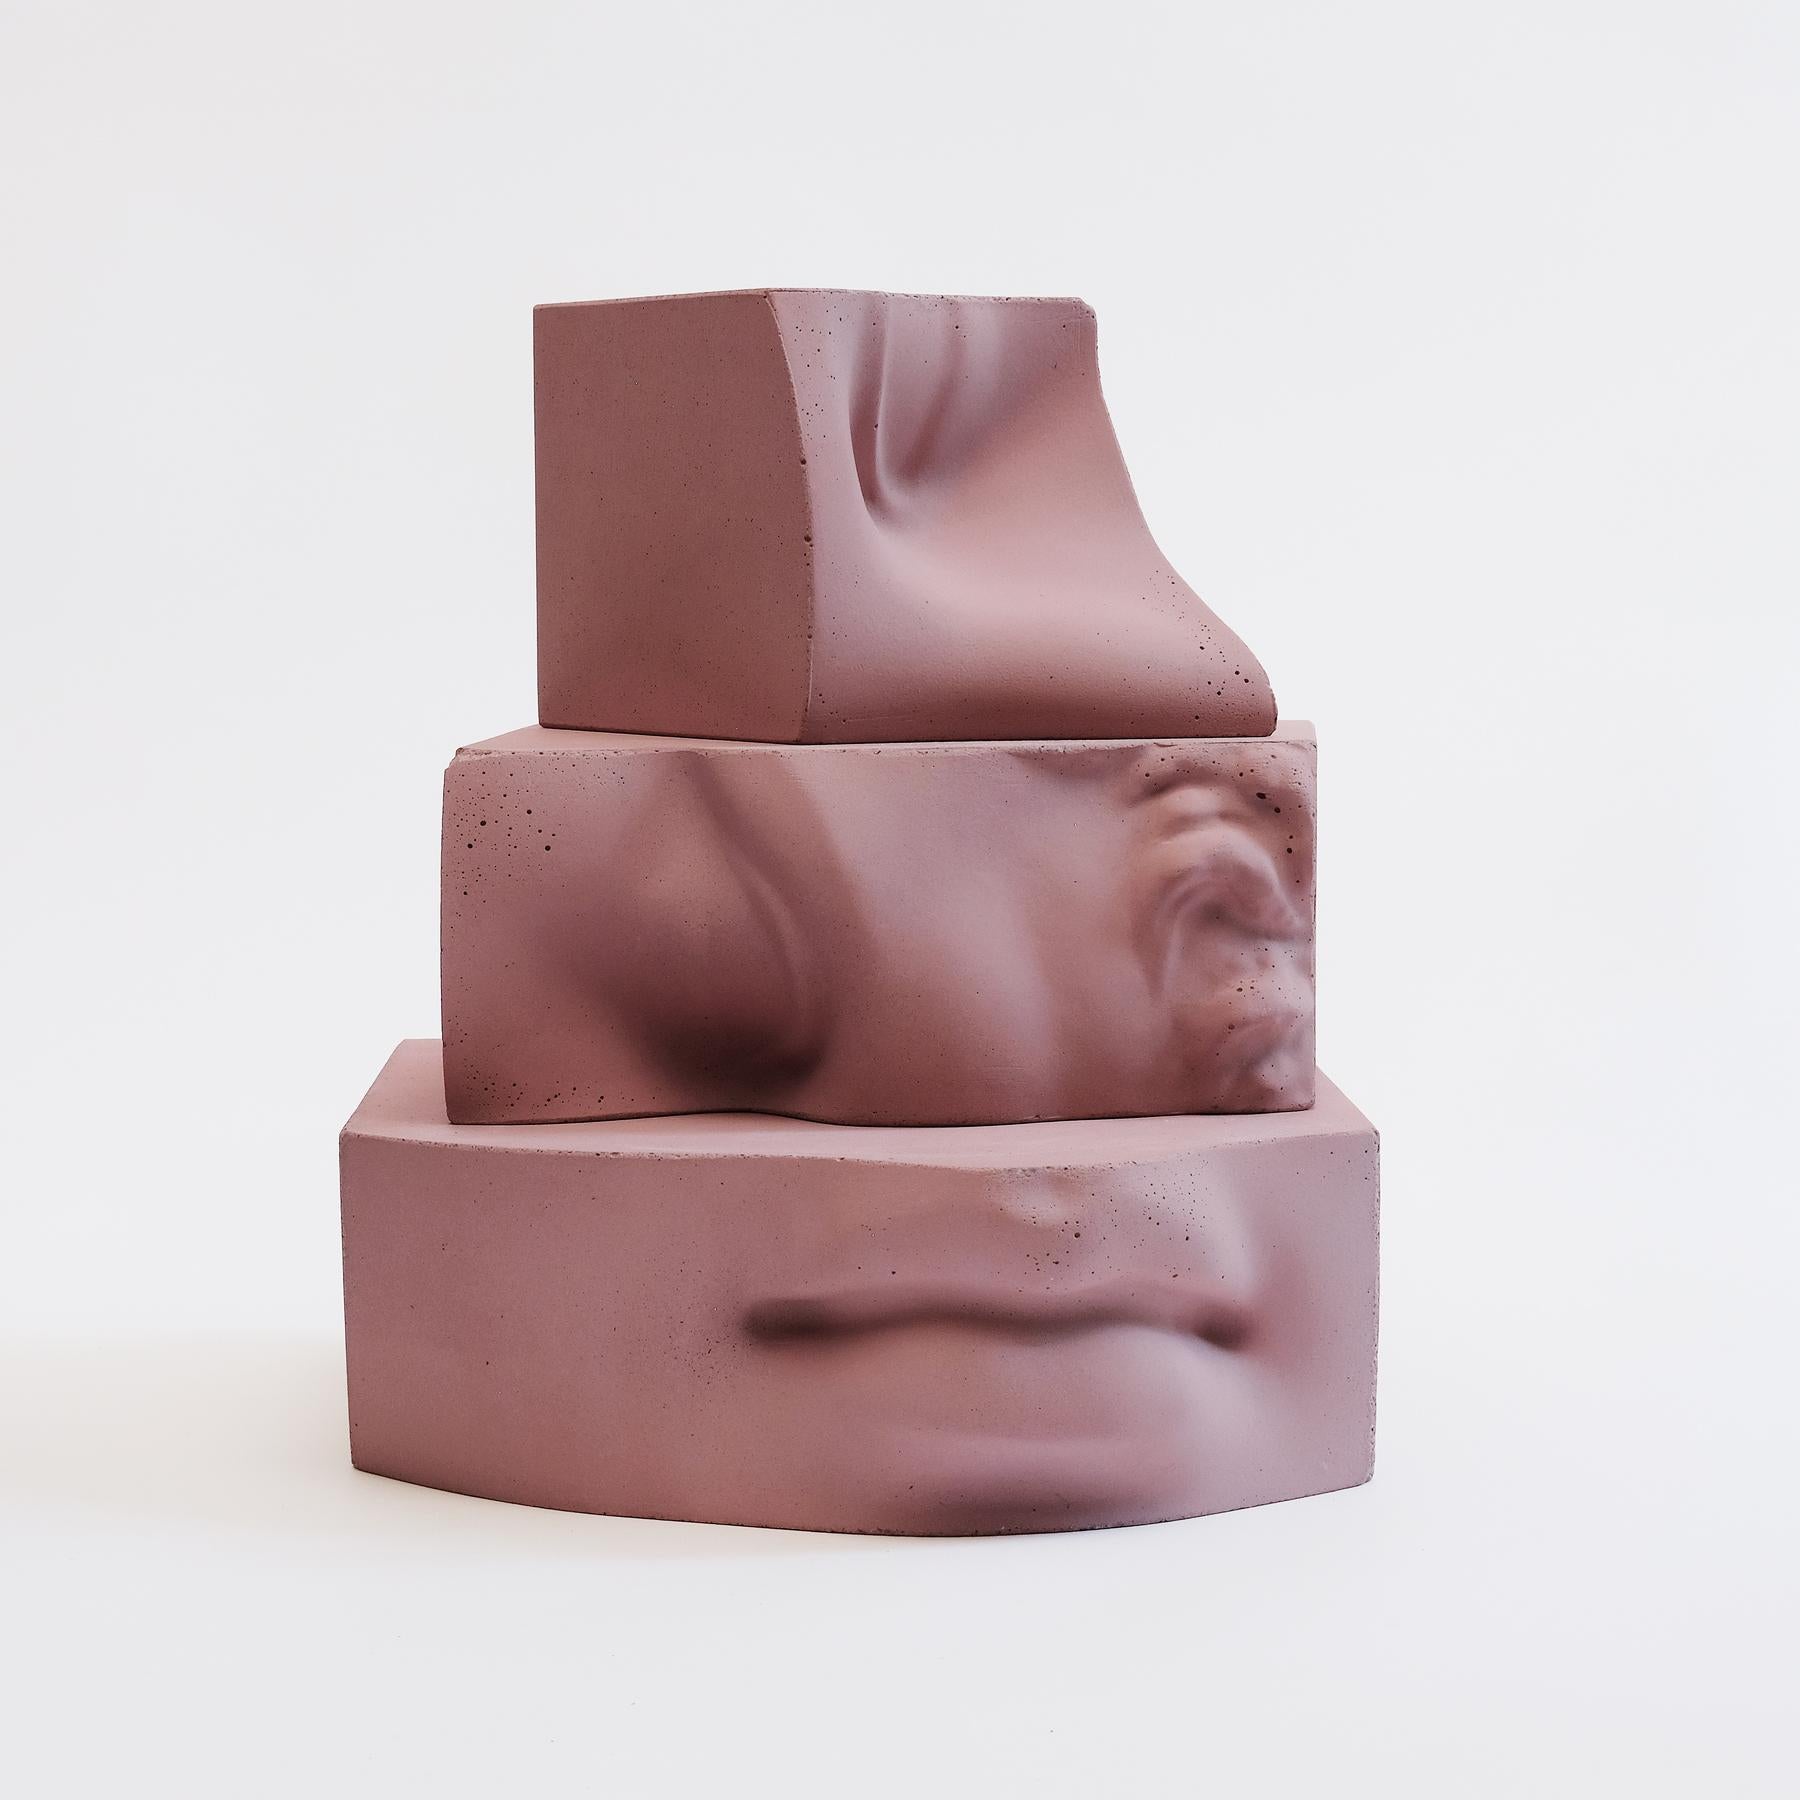 Hermes - Rose - Design Sculpture Paolo Giordano Concrete Cement Cast For Sale 1